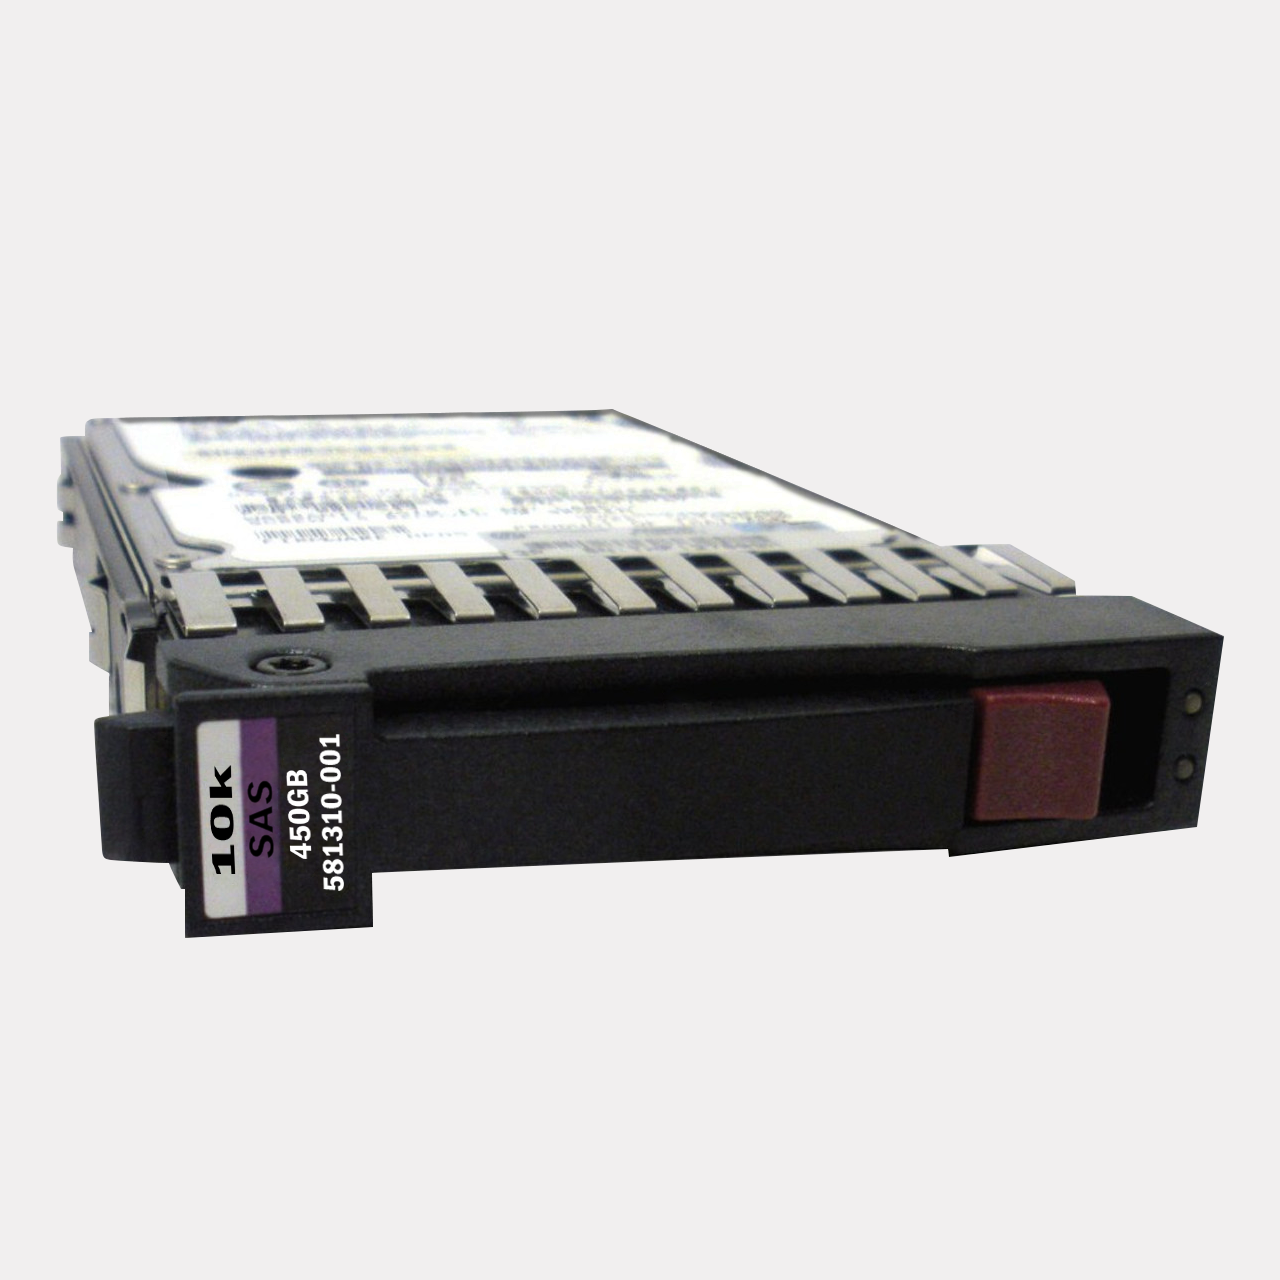 HPE - 450GB 10K RPM SAS